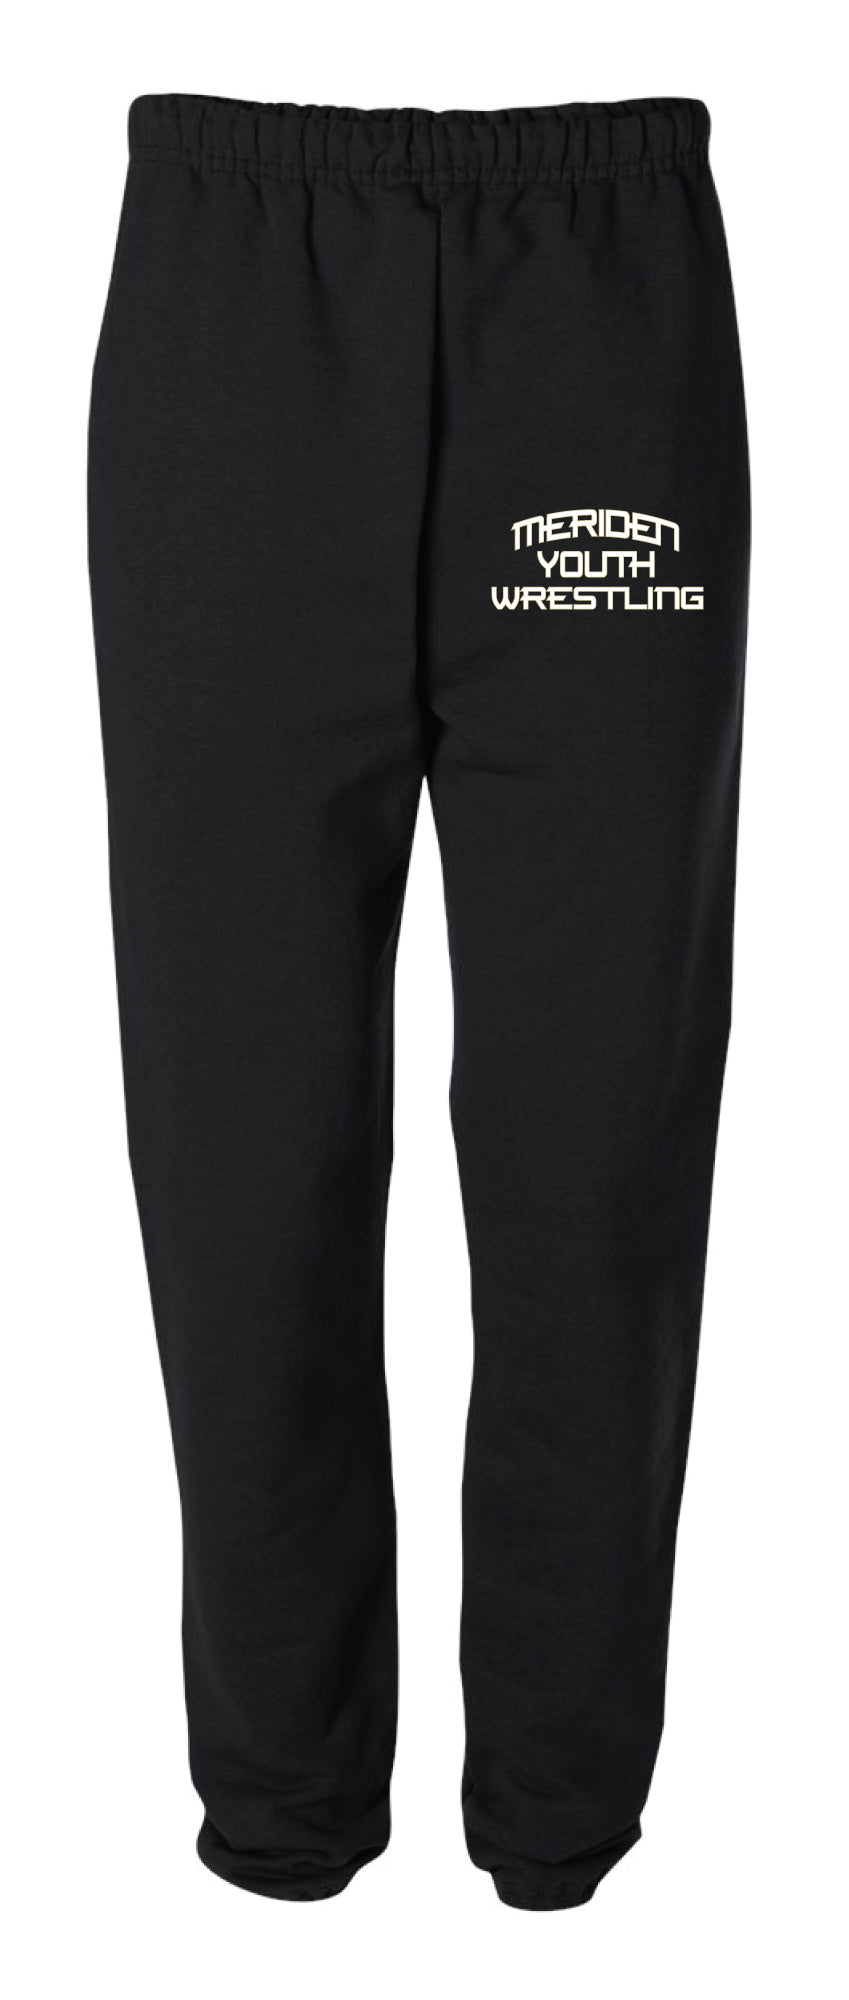 Meriden Youth Wrestling Cotton Sweatpants - Black - 5KounT2018